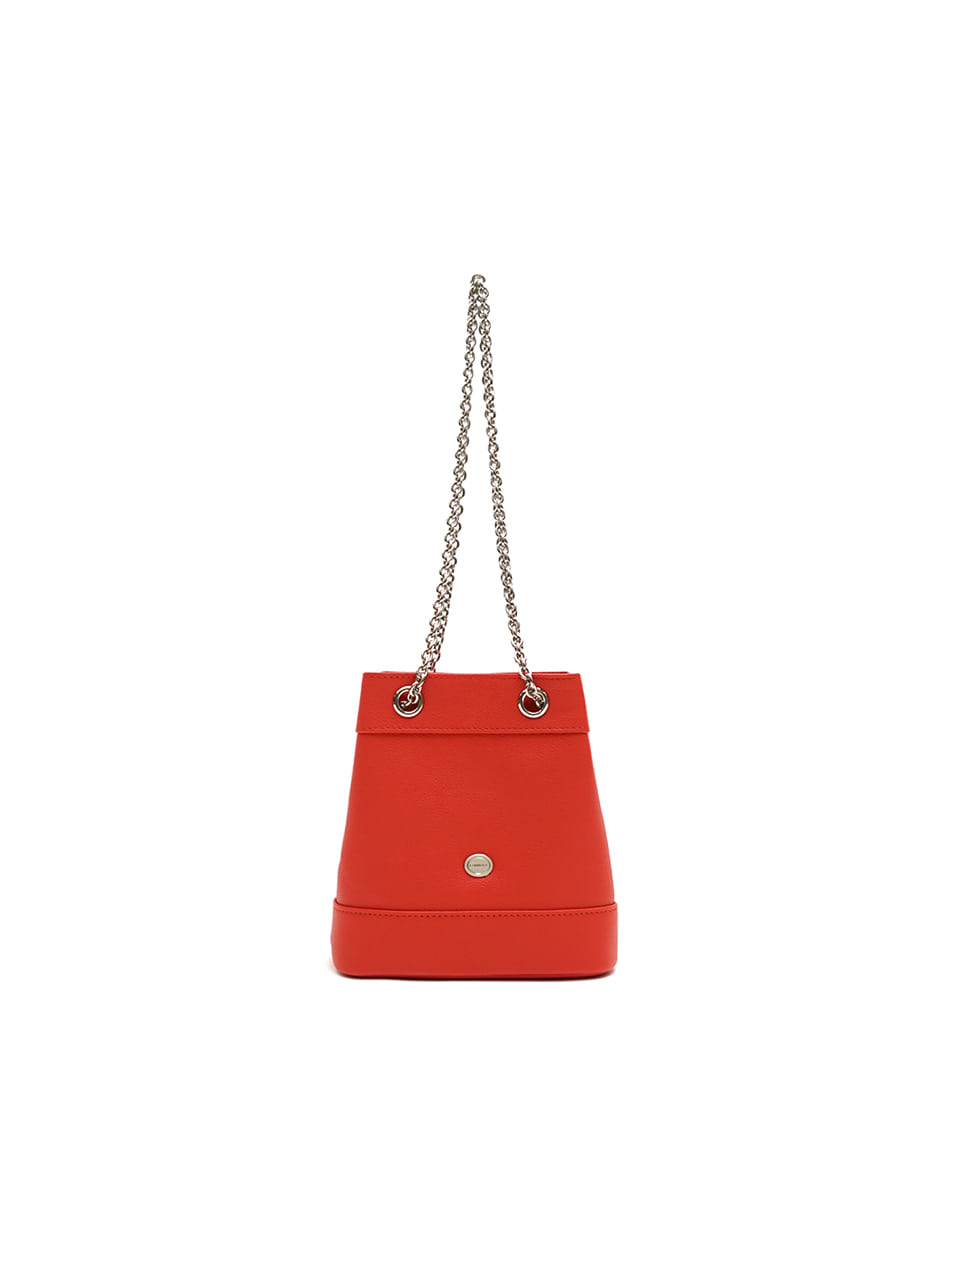 [Spring sale 20% off]   Silver pendant mini chain bag / red